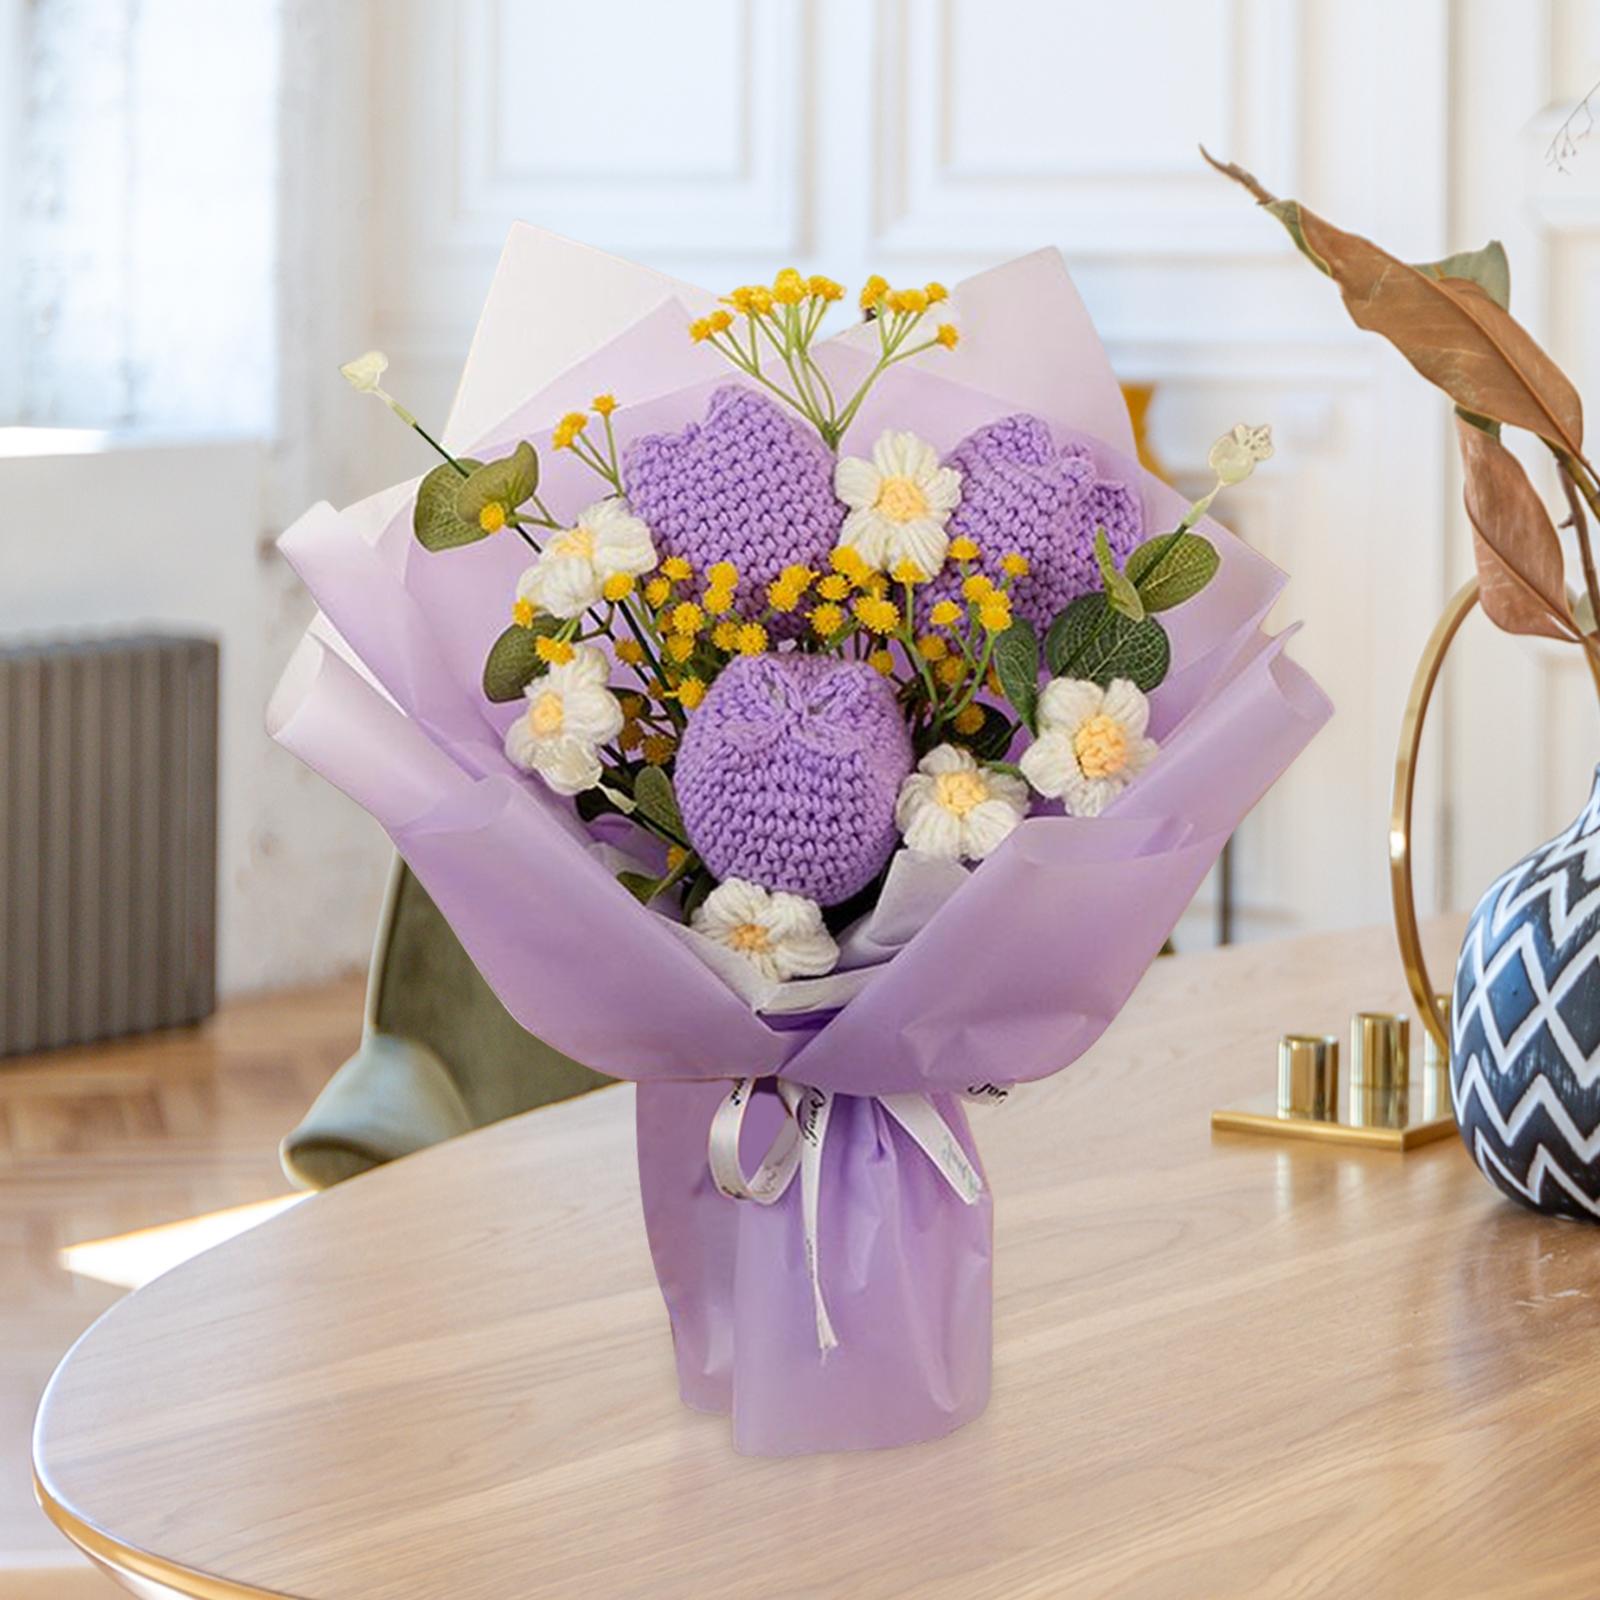 Crochet Flower Bouquet, Knitted Flowers with Eucalyptus, Artificial Flowers for Thanksgiving, Girlfriend, Festival Violet, Size: 35cmx30cm, Purple